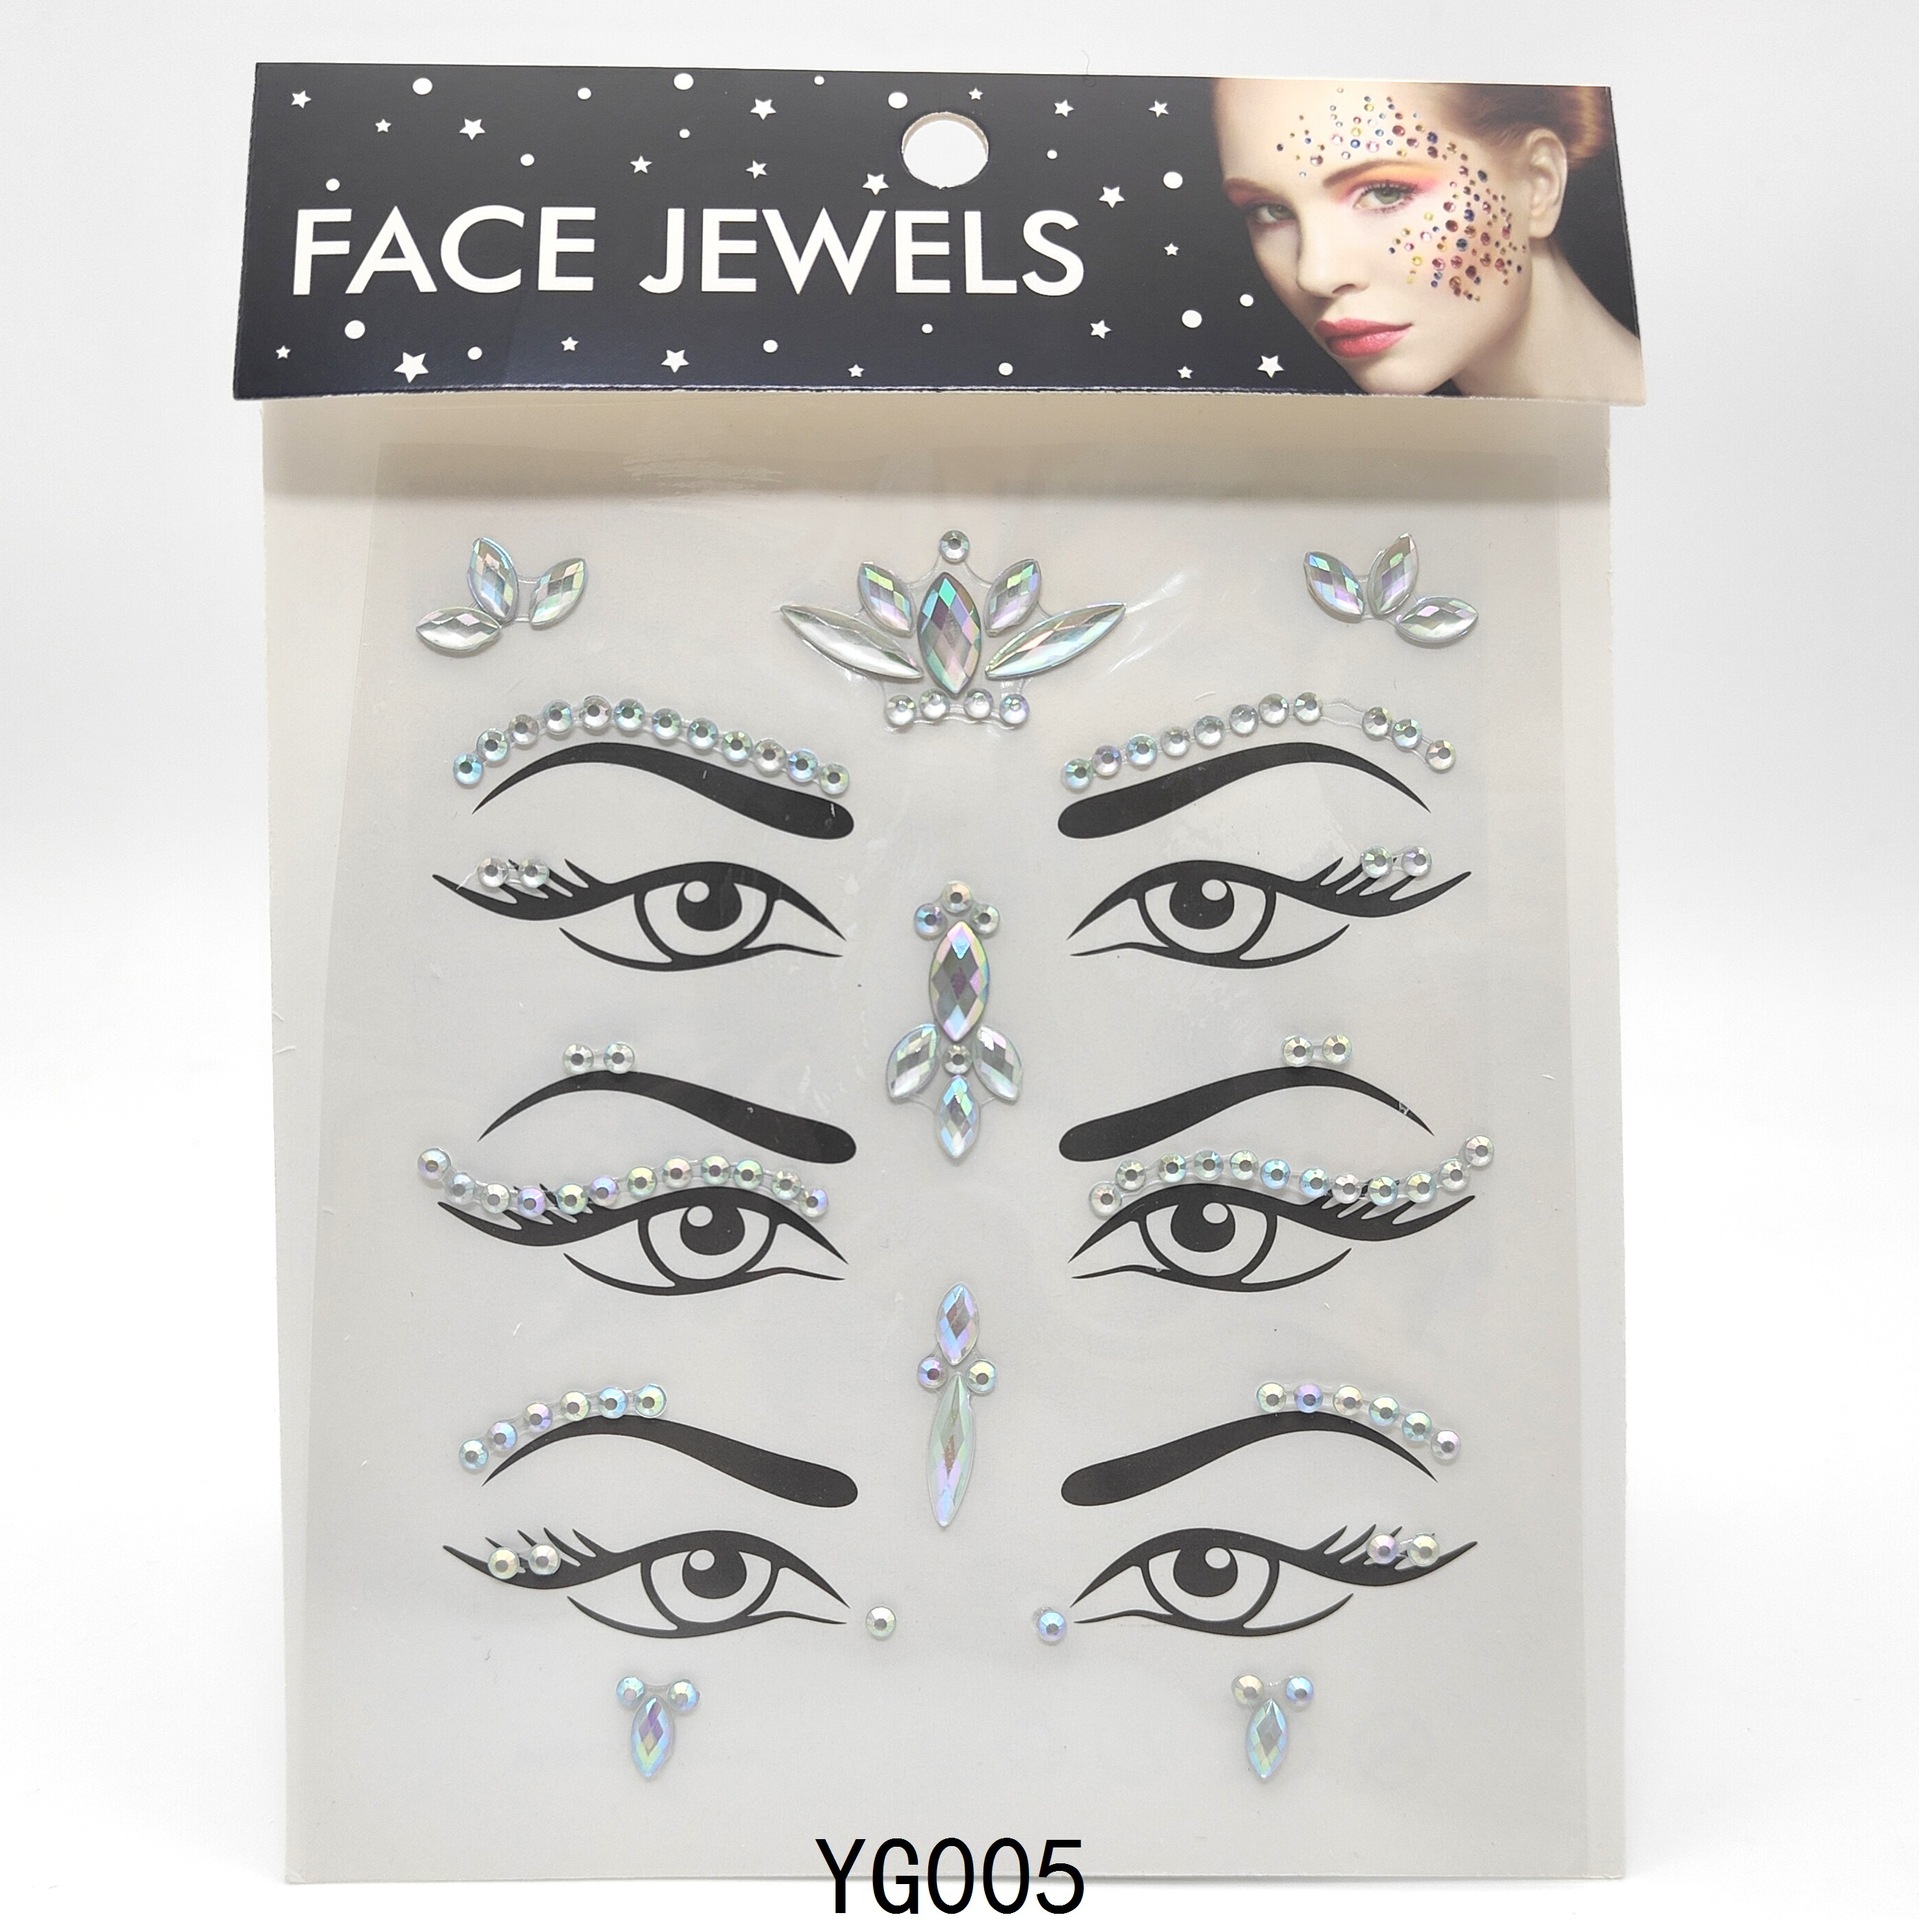 Luminous 3 Pairs Acrylic Diamond Paste Eye Pad Bindi Eye Diamond Stickers Glowing Face Pasters Festival Prom Face Makeup Stickers